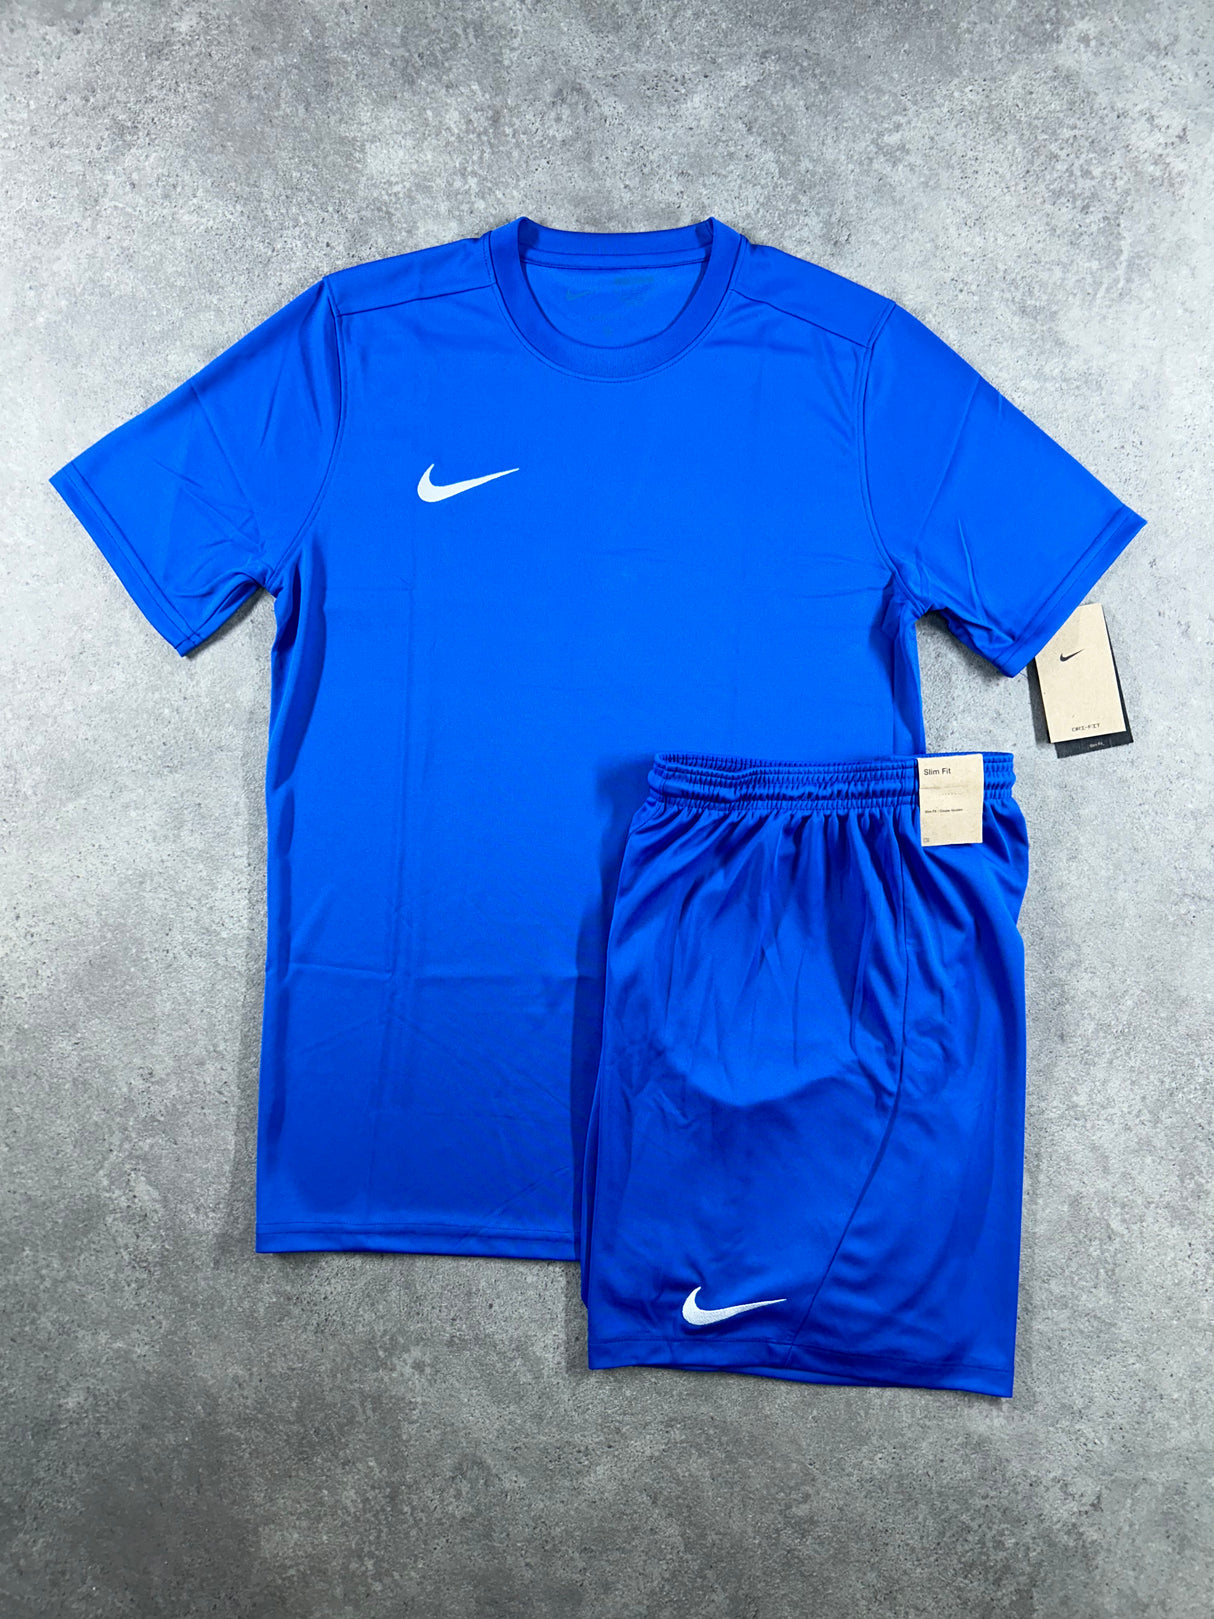 Nike - Dri Fit Set - Royal Blue